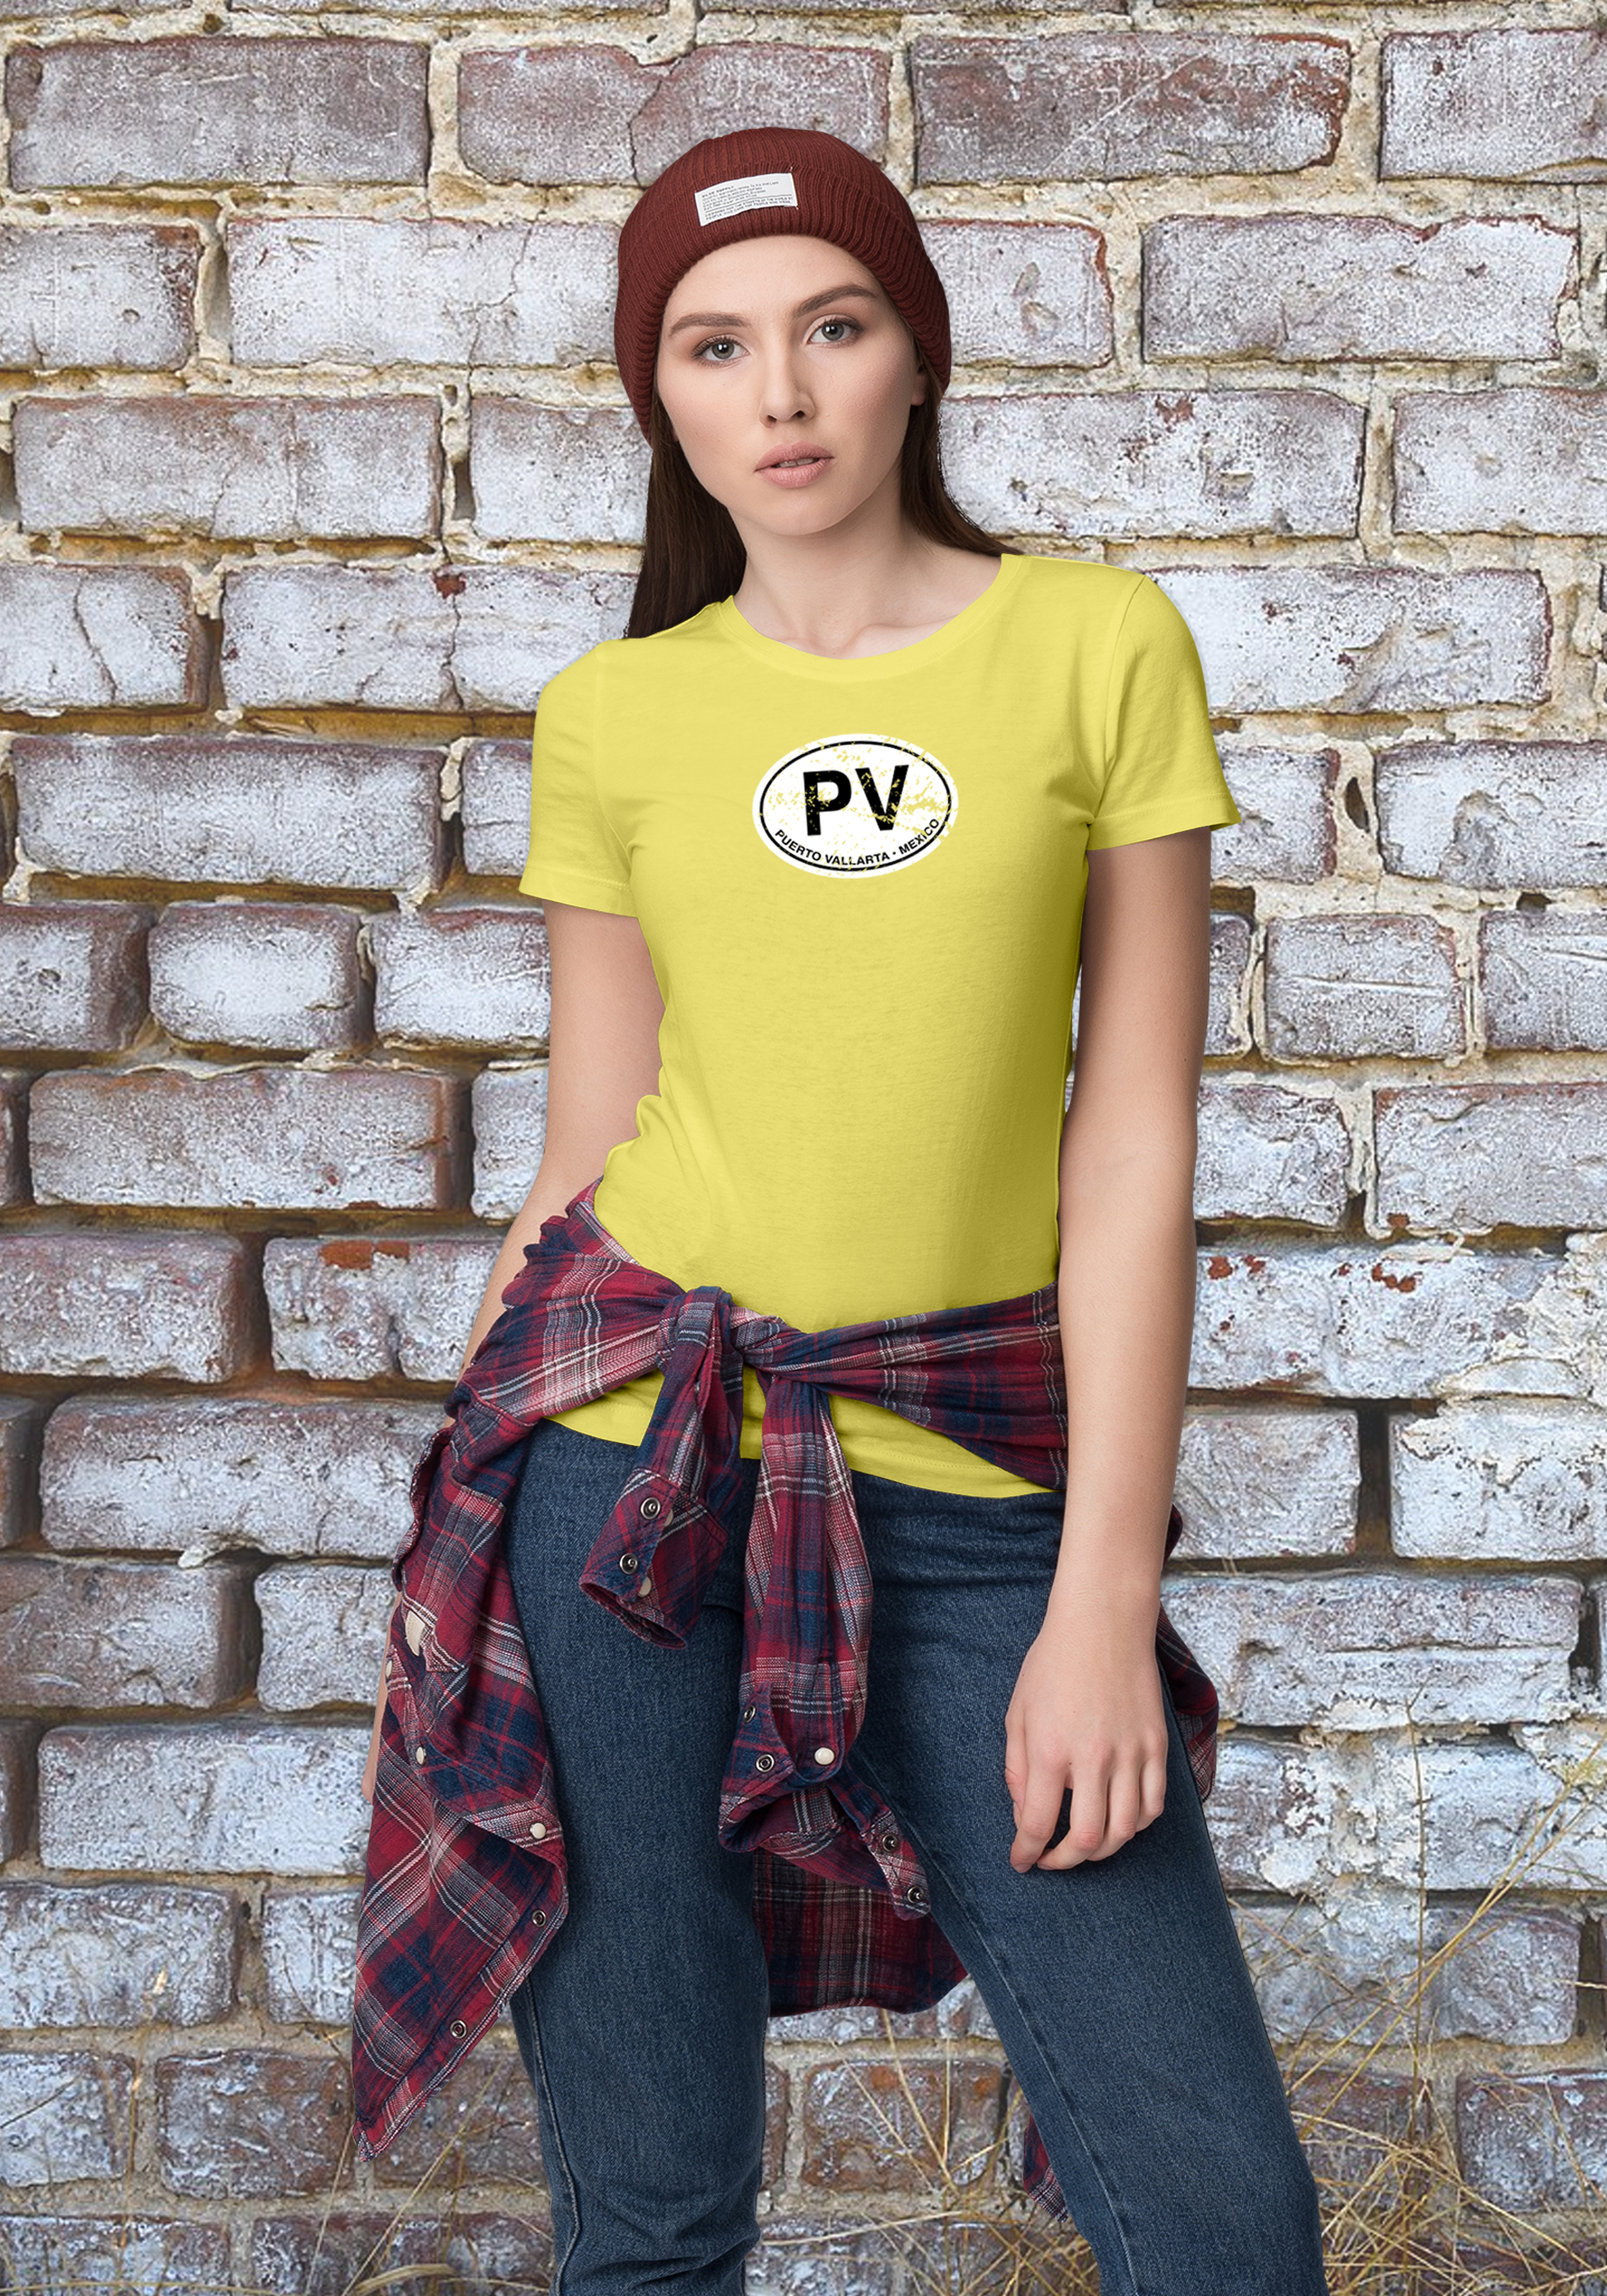 Puerto Vallarta Women's Classic T-Shirt Souvenirs - My Destination Location